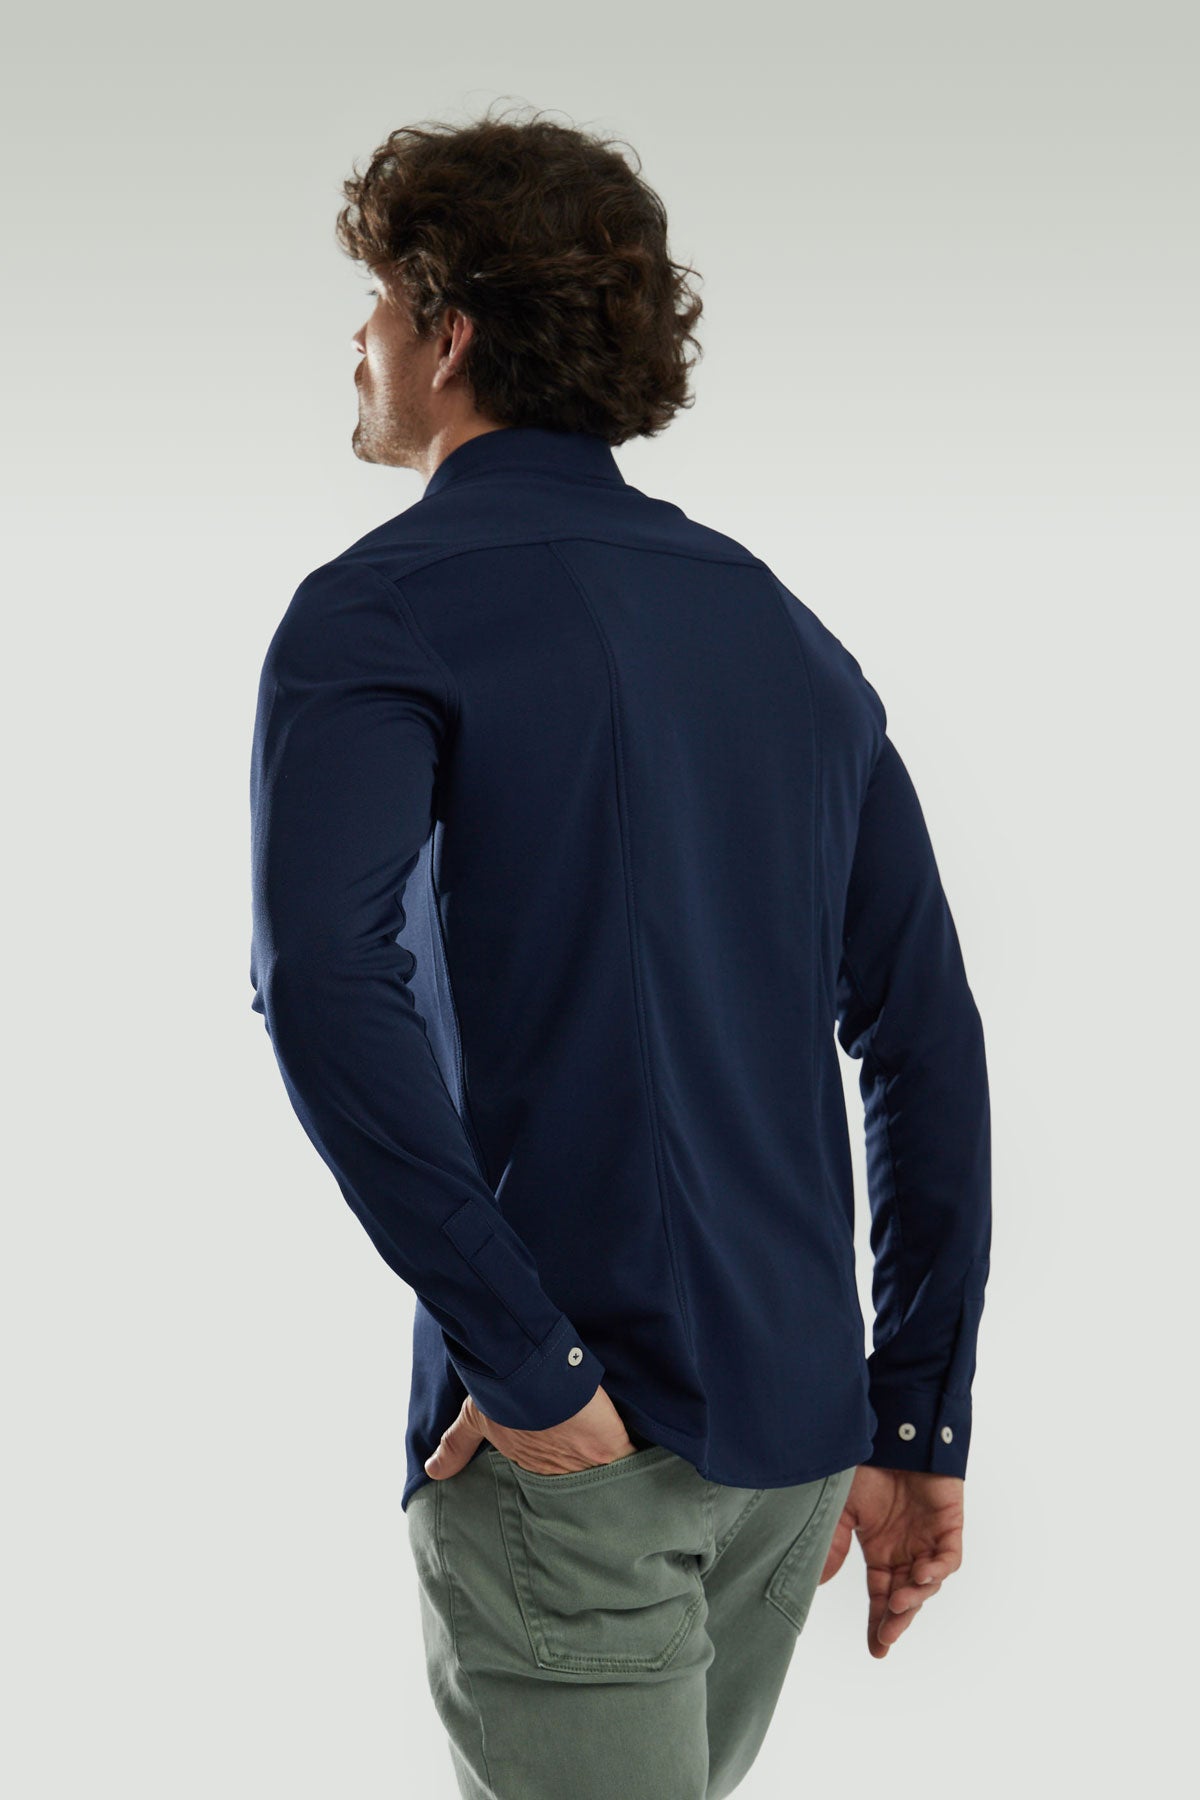 Camisa casual hombre azul marino - Sepiia